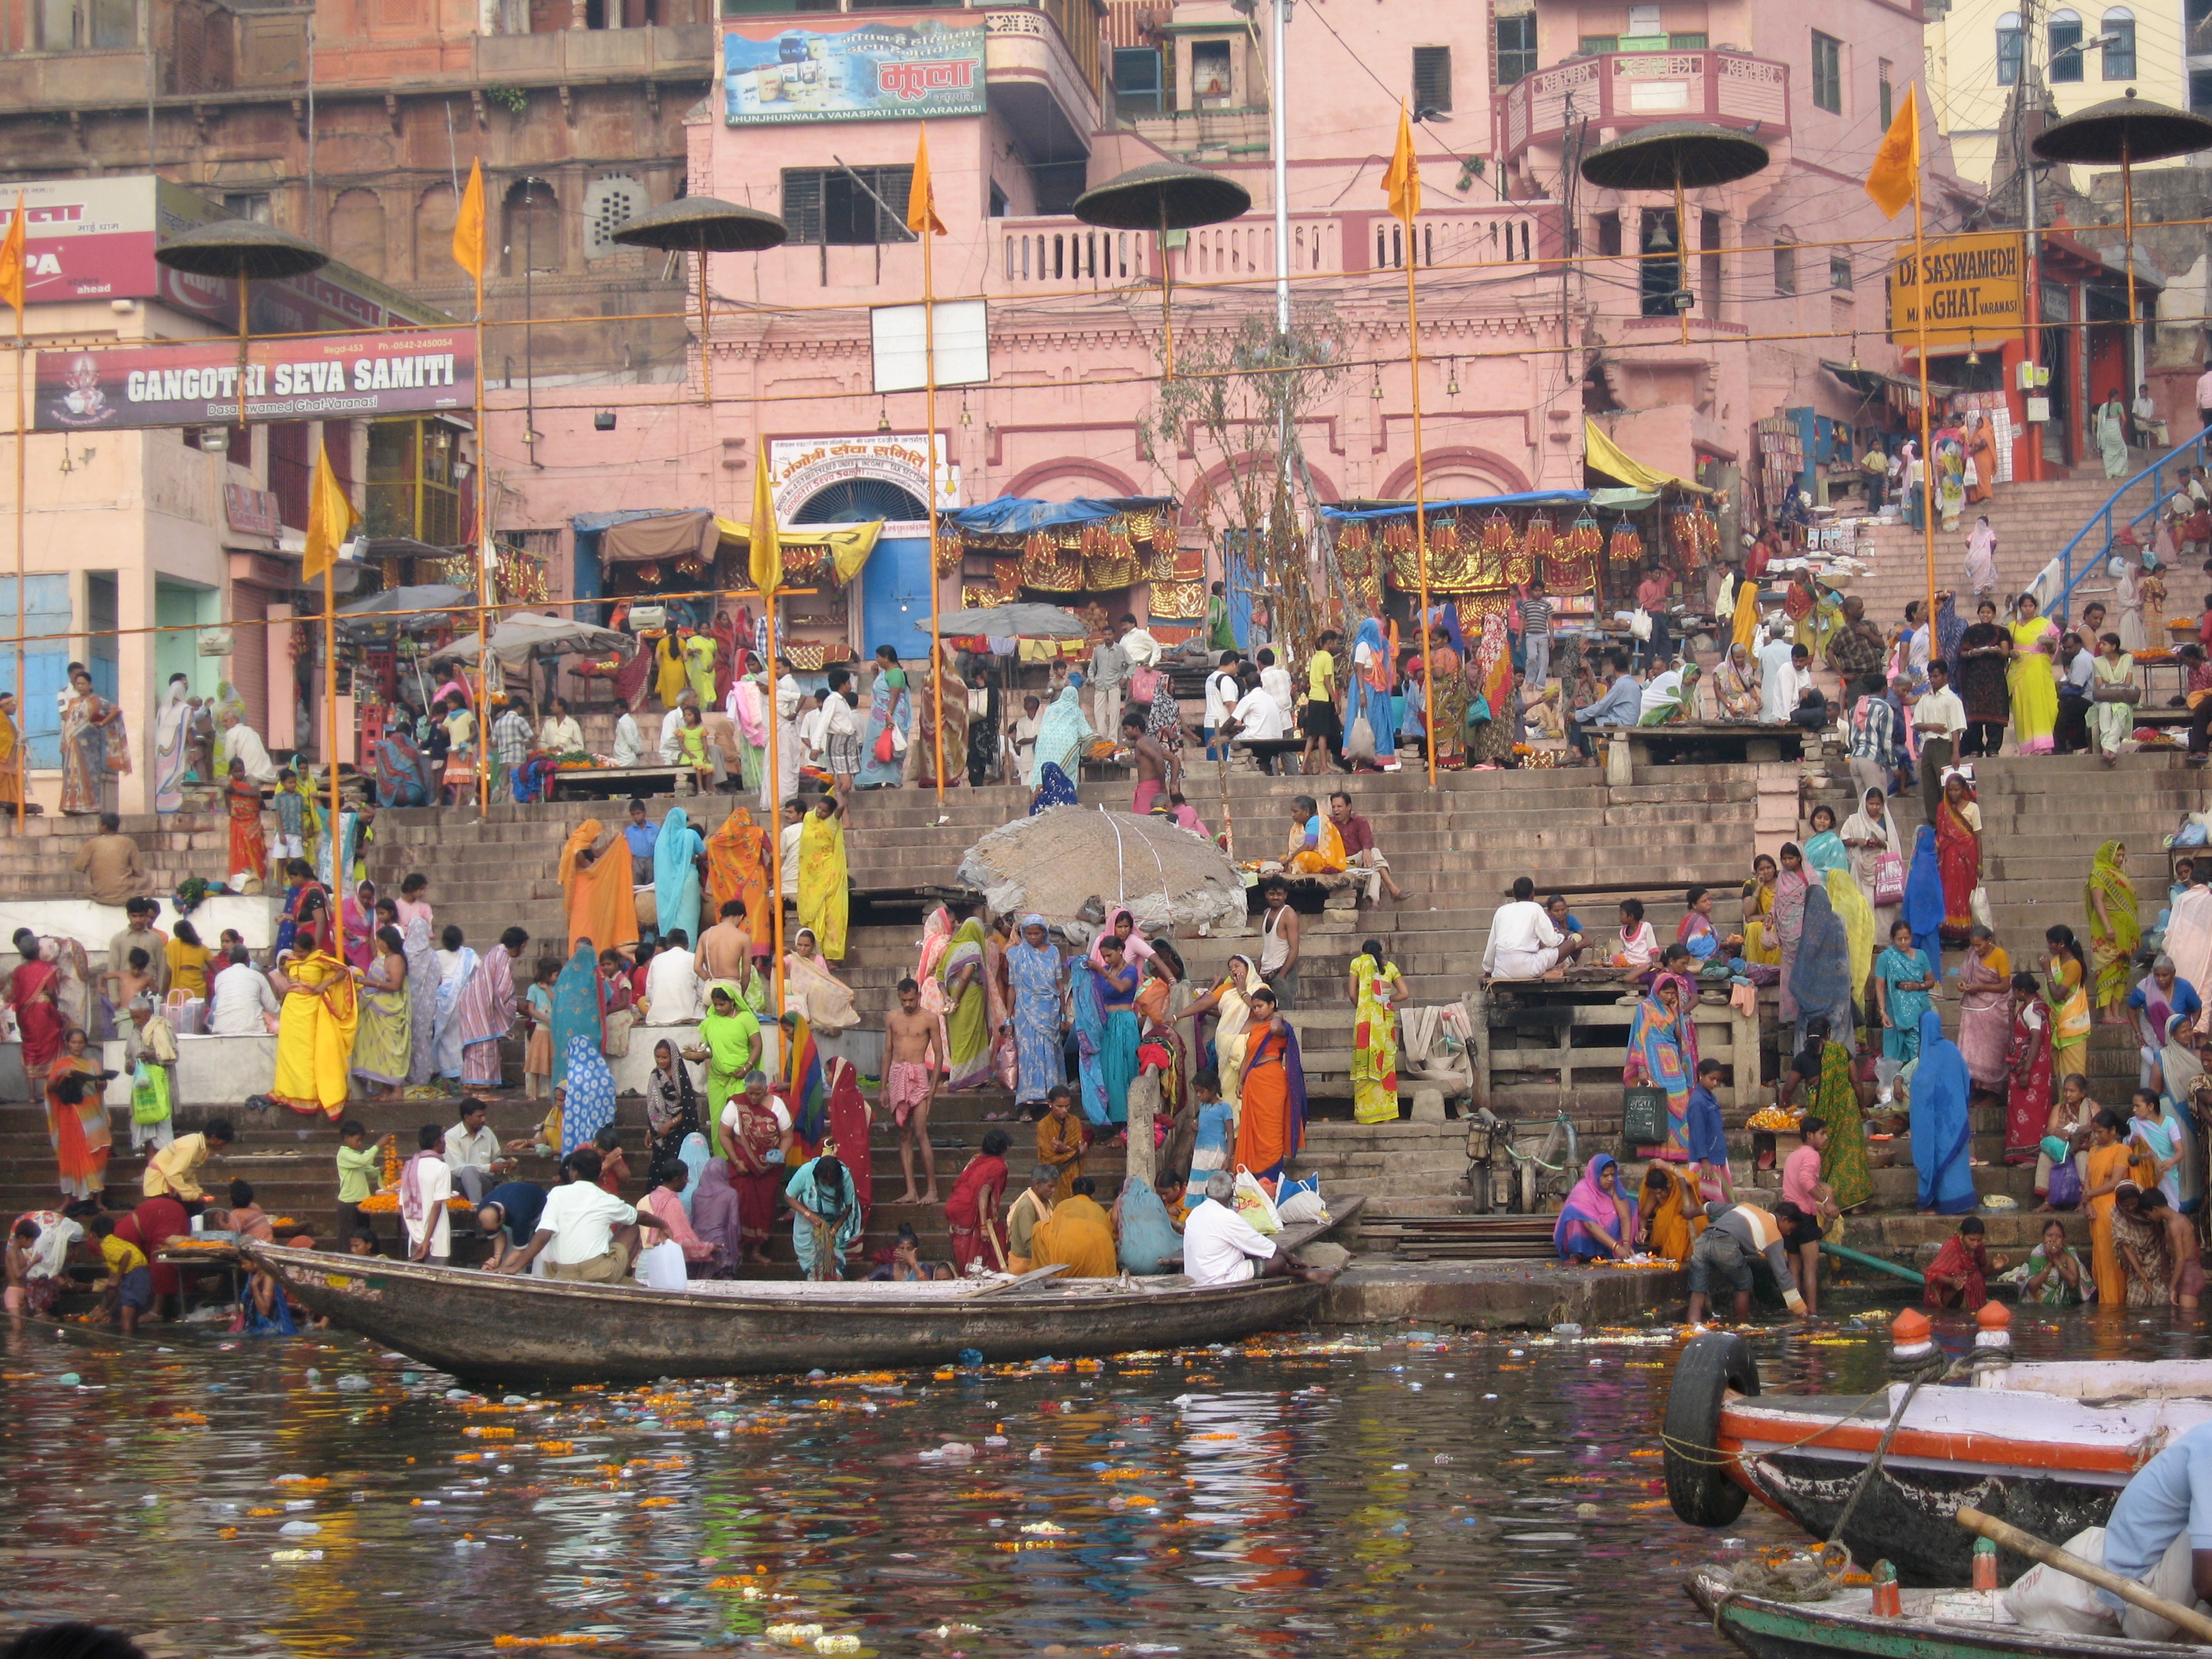 Ganga India